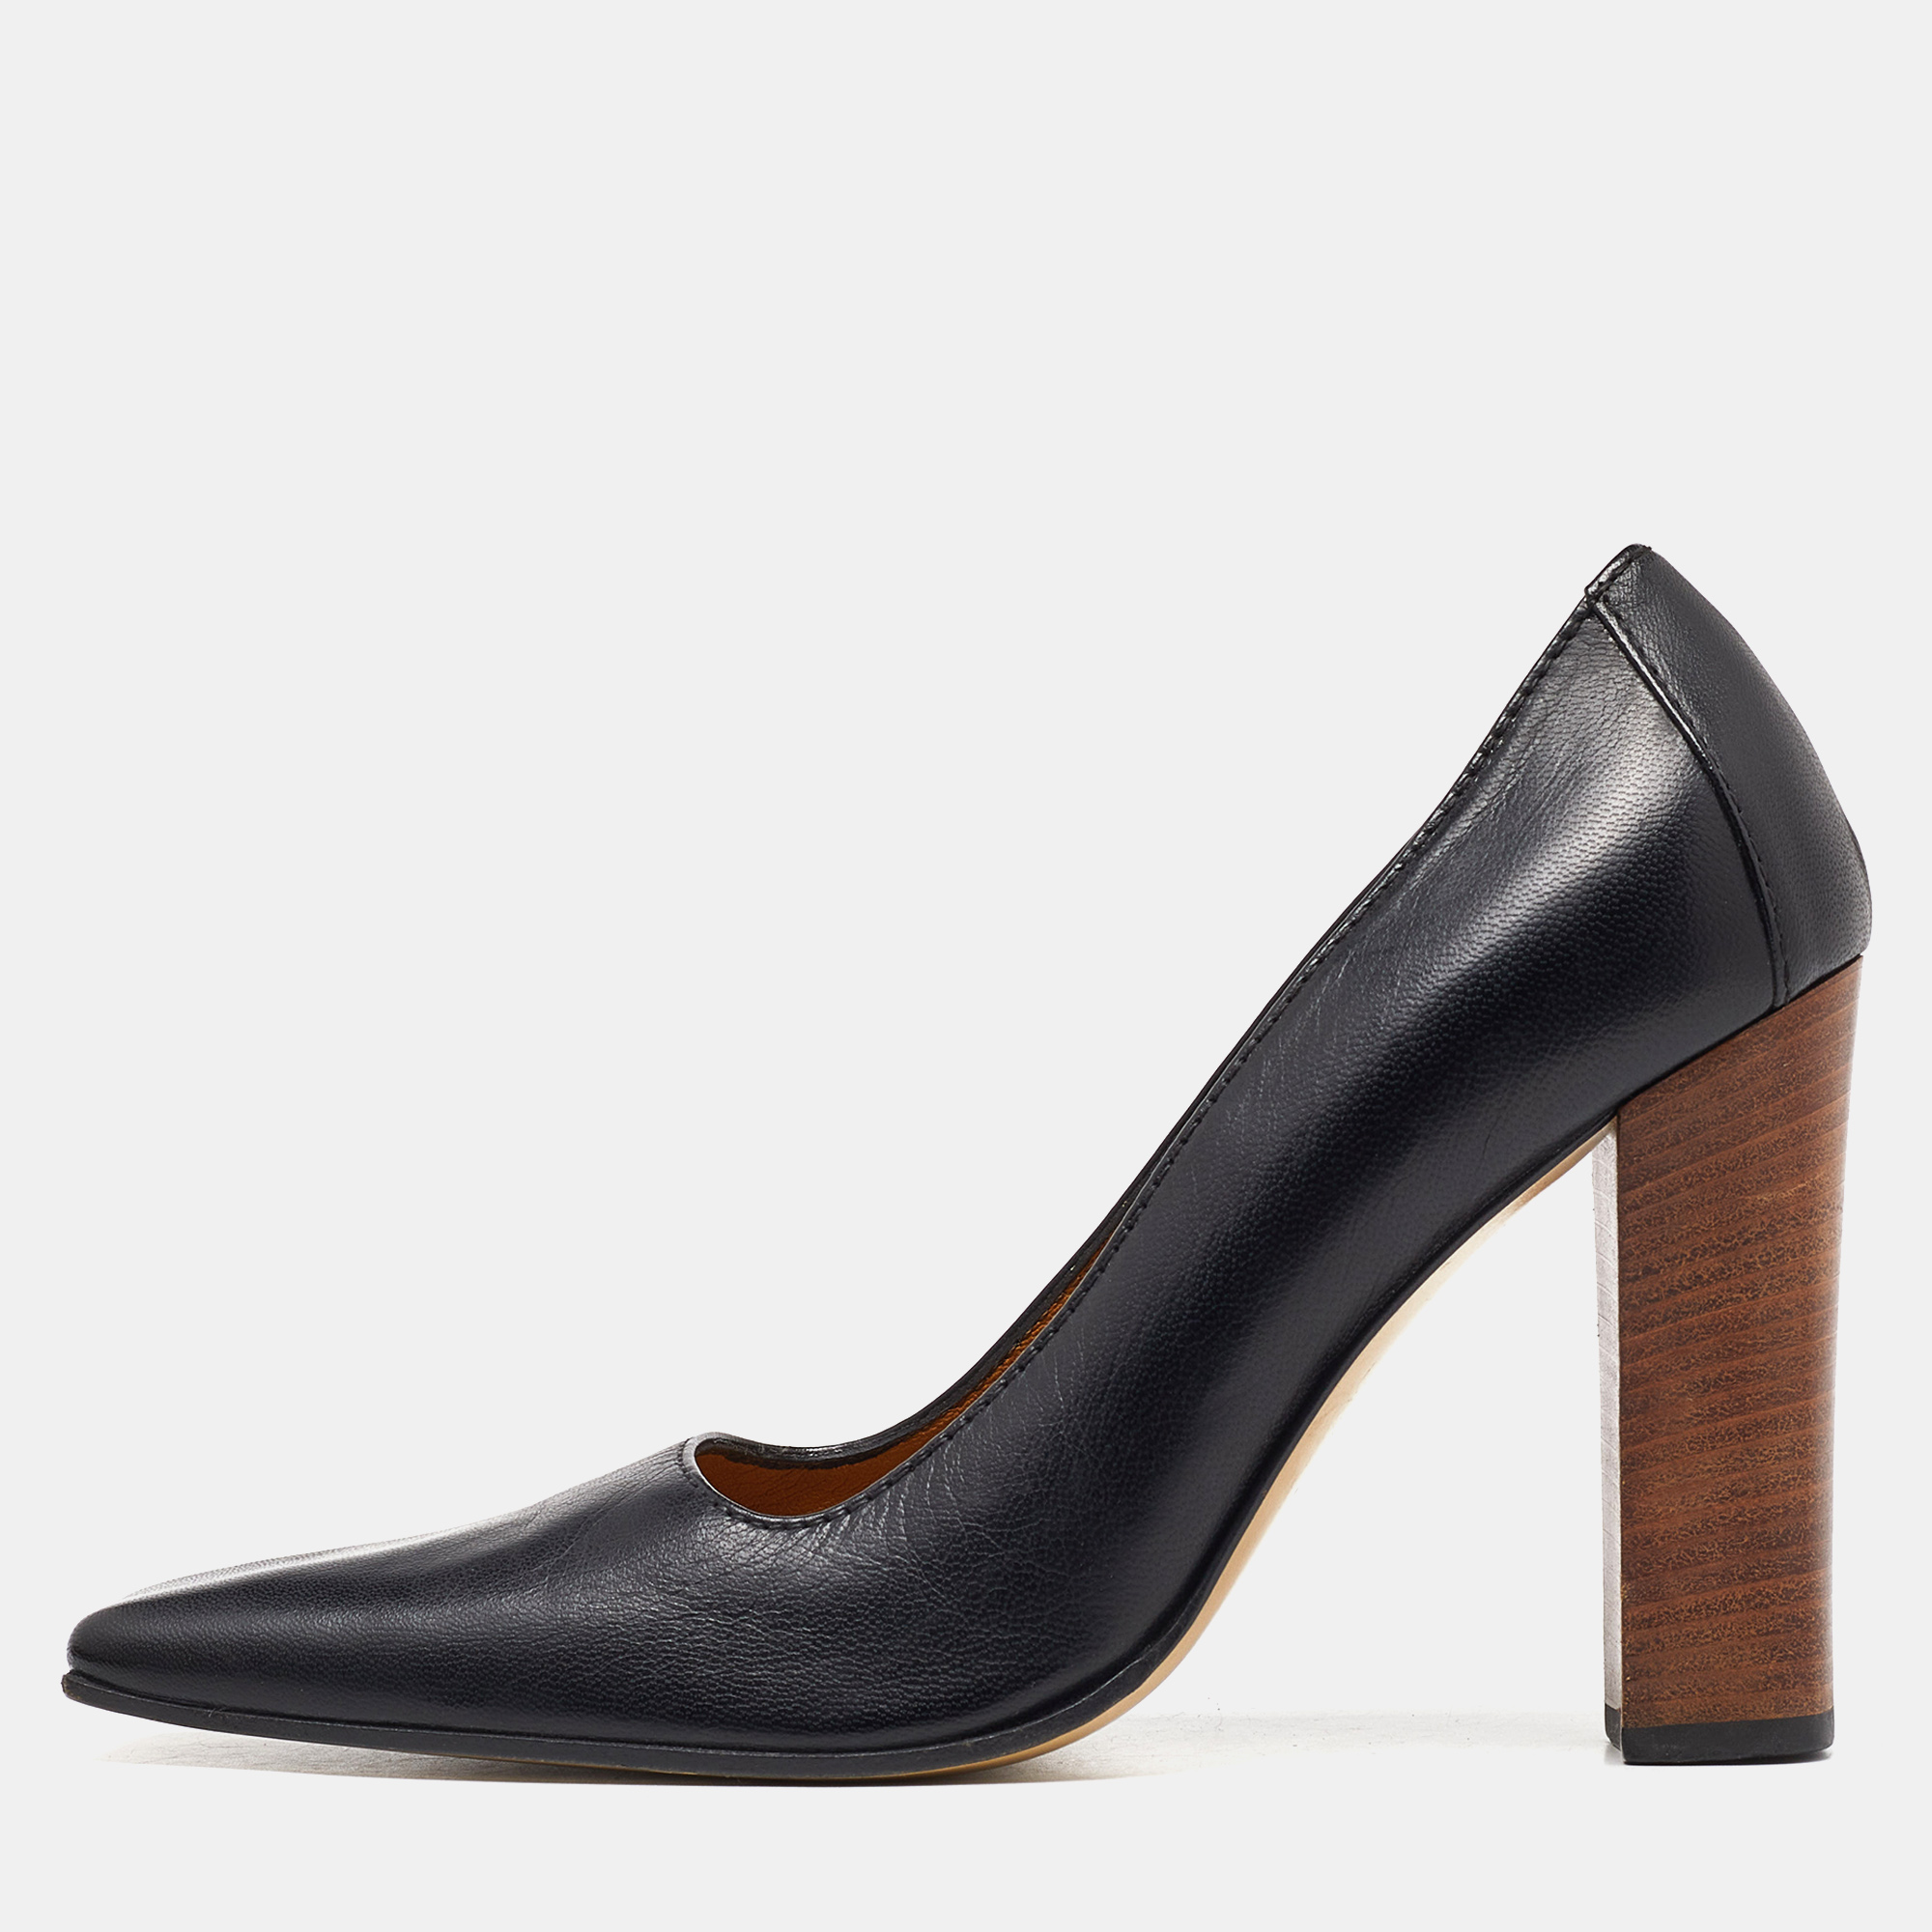 Gucci black leather sqaure toe block heel pumps size 38